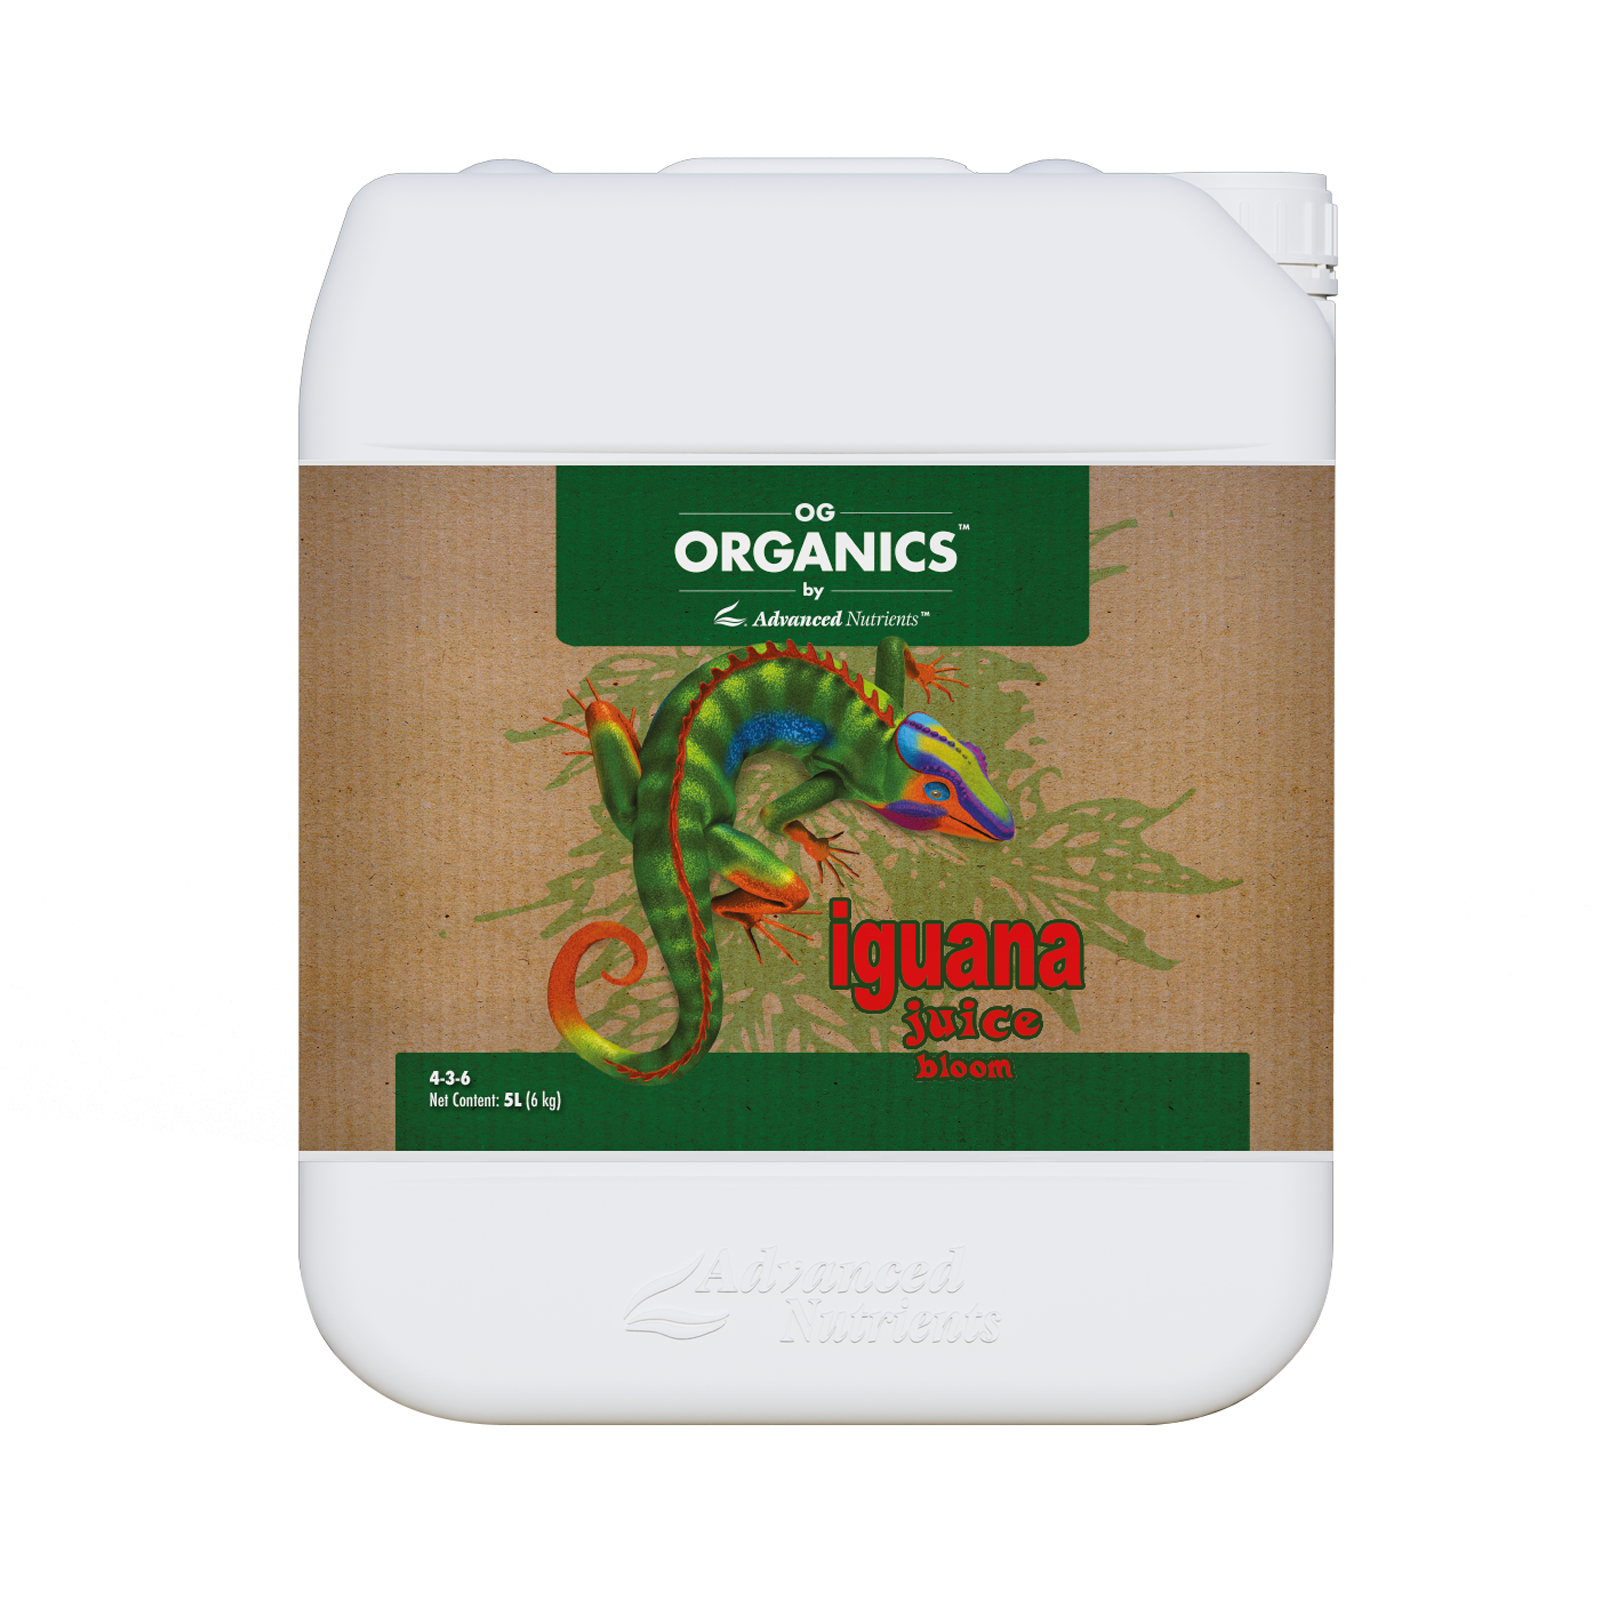 Iguana juice bloom organic (イグアナ ジュース ブルーム